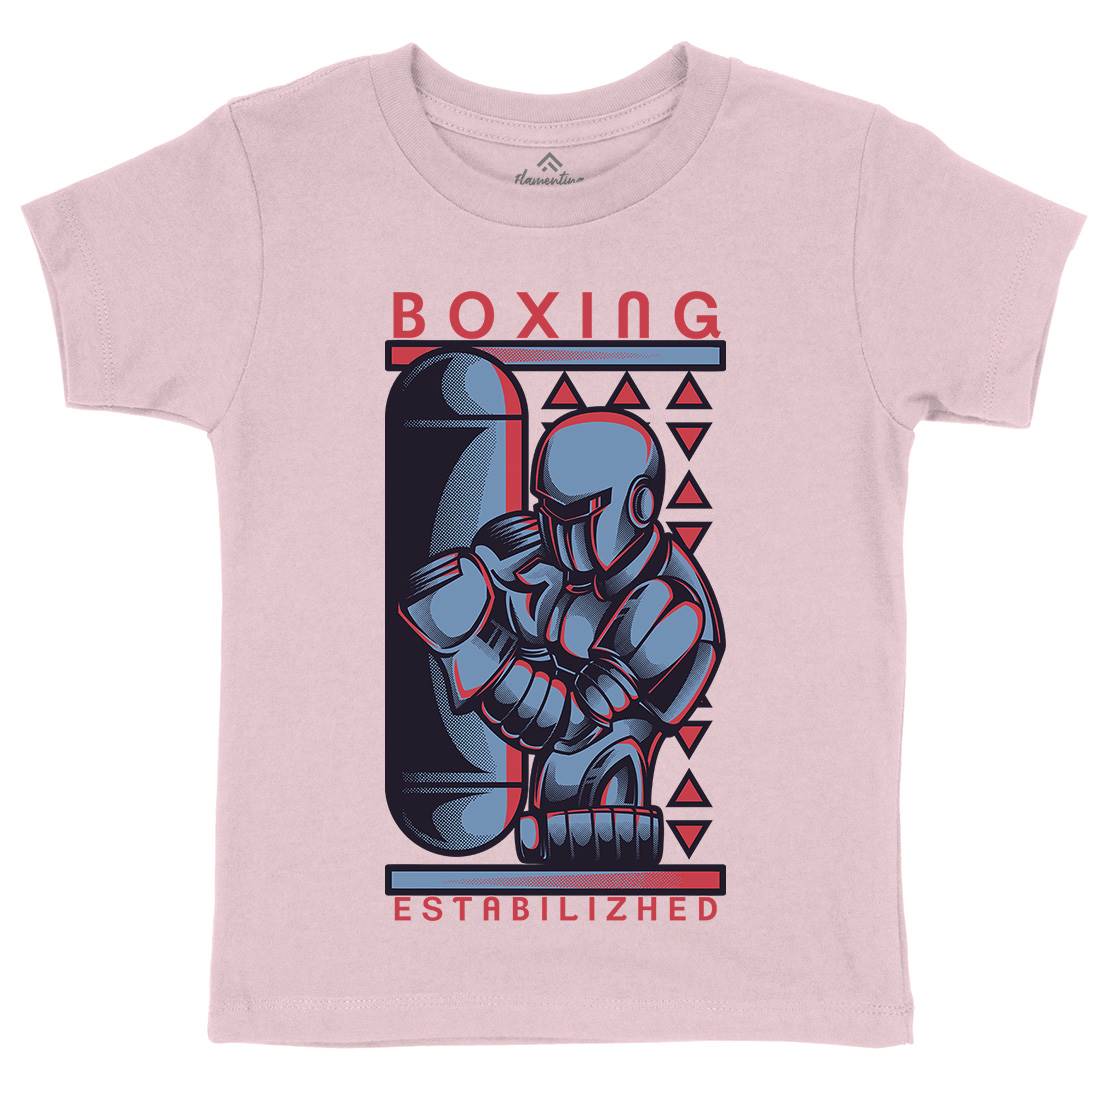 Robo Boxing Kids Crew Neck T-Shirt Space D801